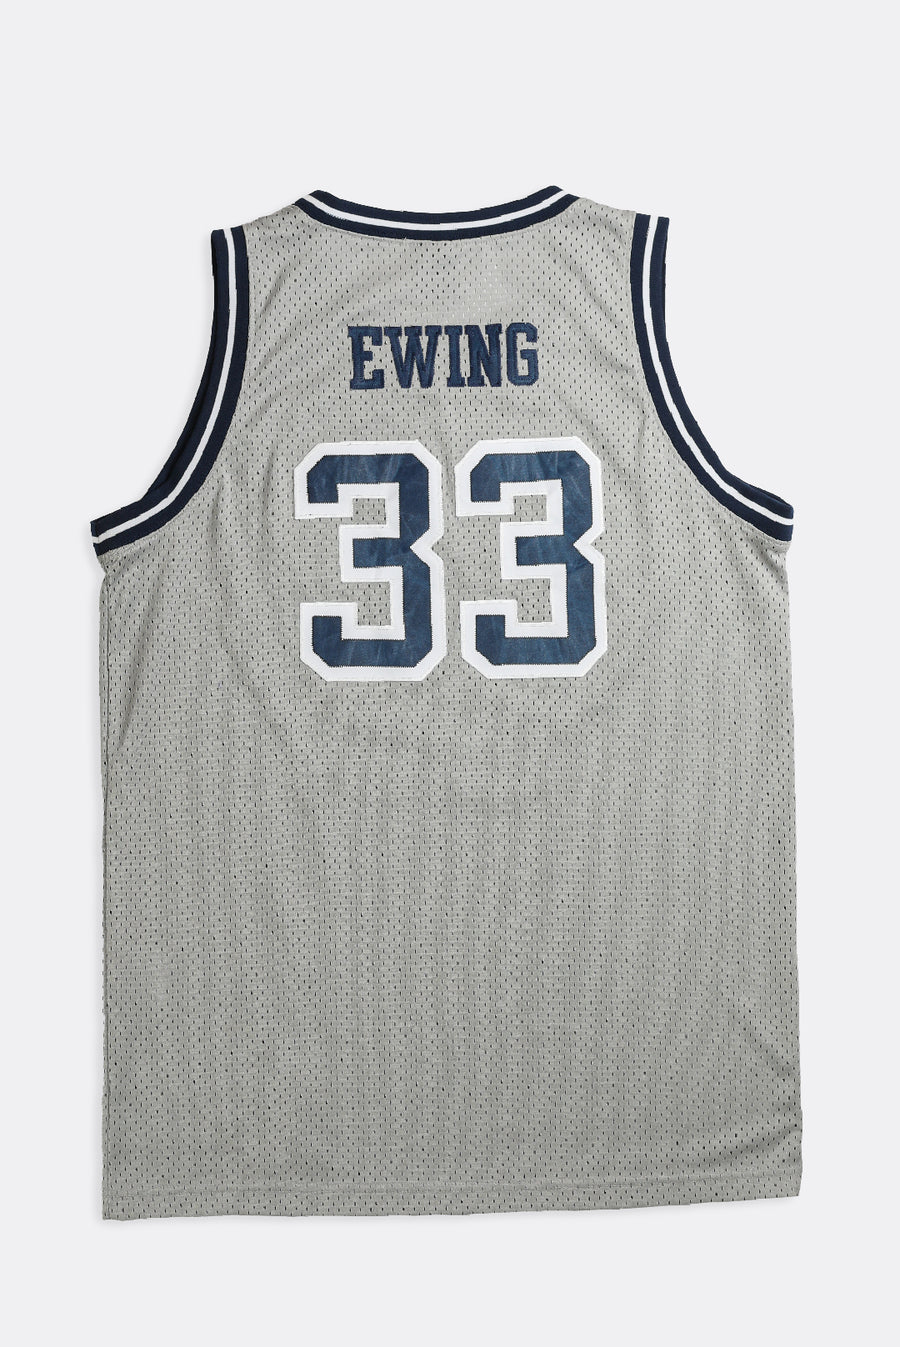 Vintage Georgetown Basketball Jersey